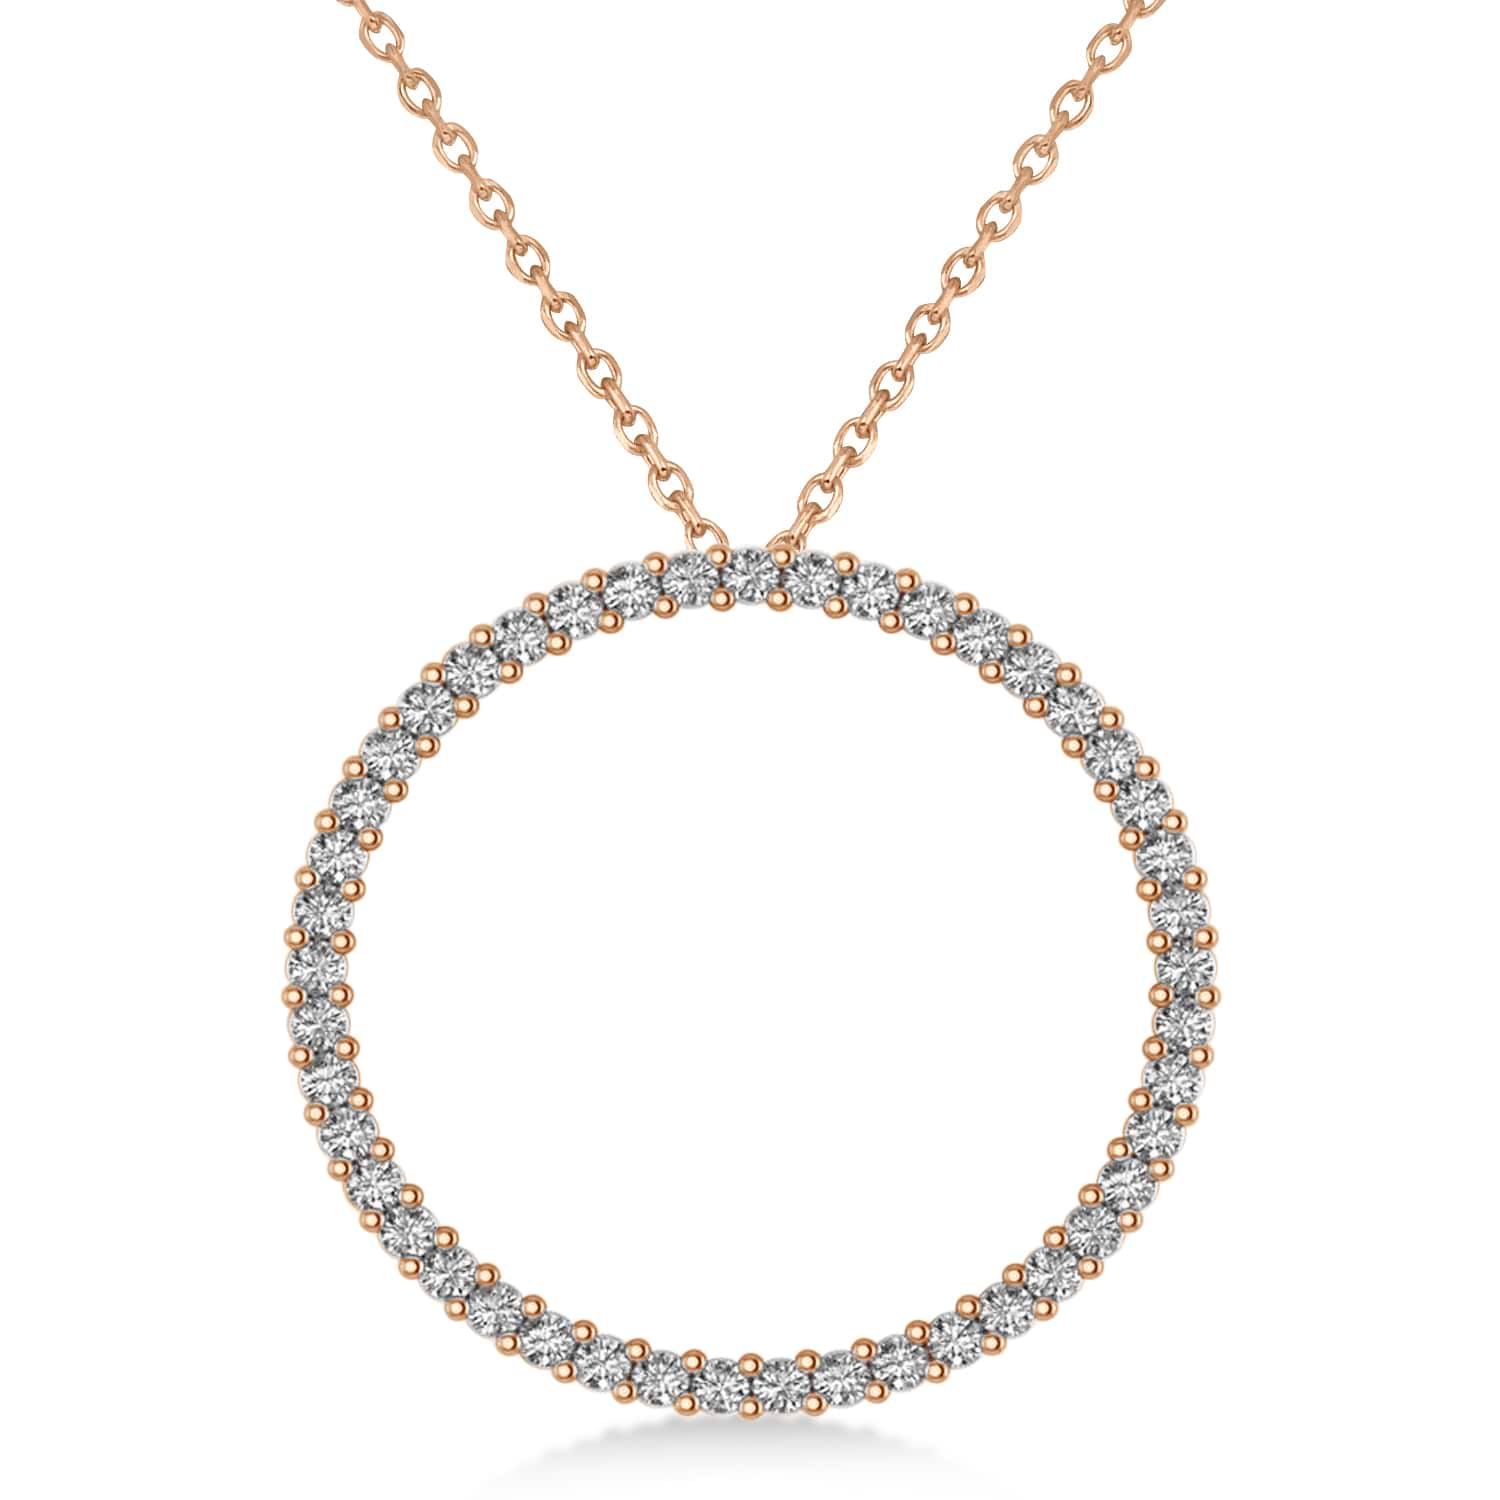 Diamond Circle of Life Charm Pendant Necklace 14k Rose Gold (0.68ct)